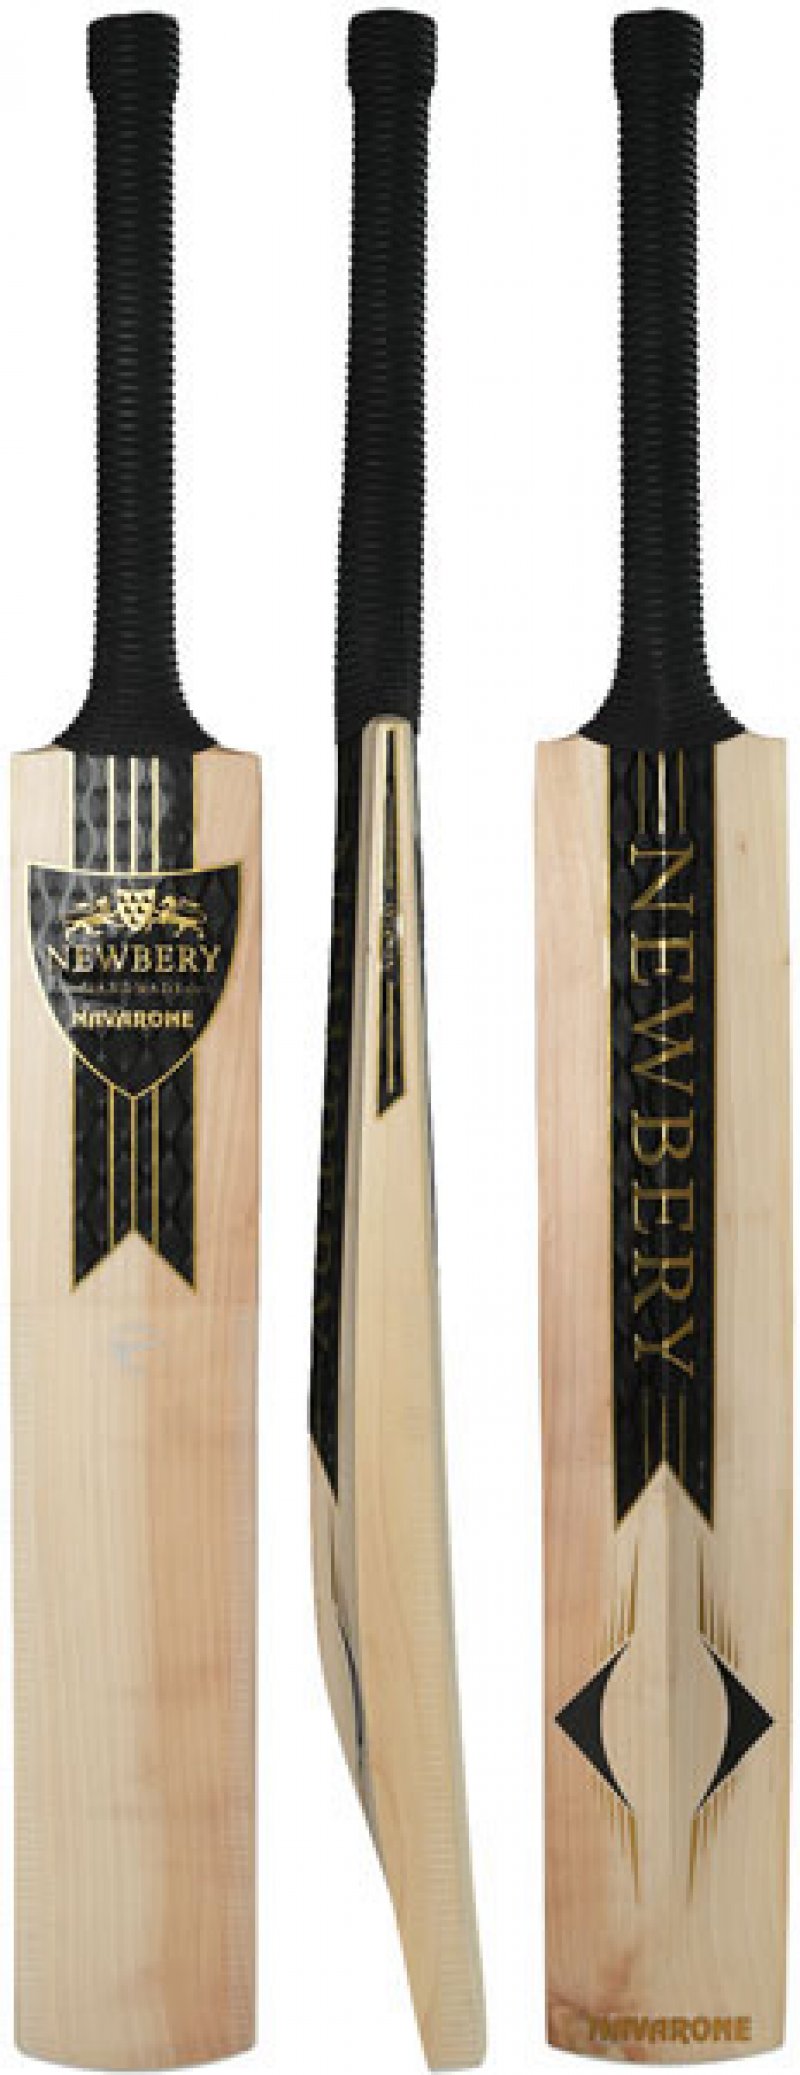 Newbery Navarone G4 Cricket Bat